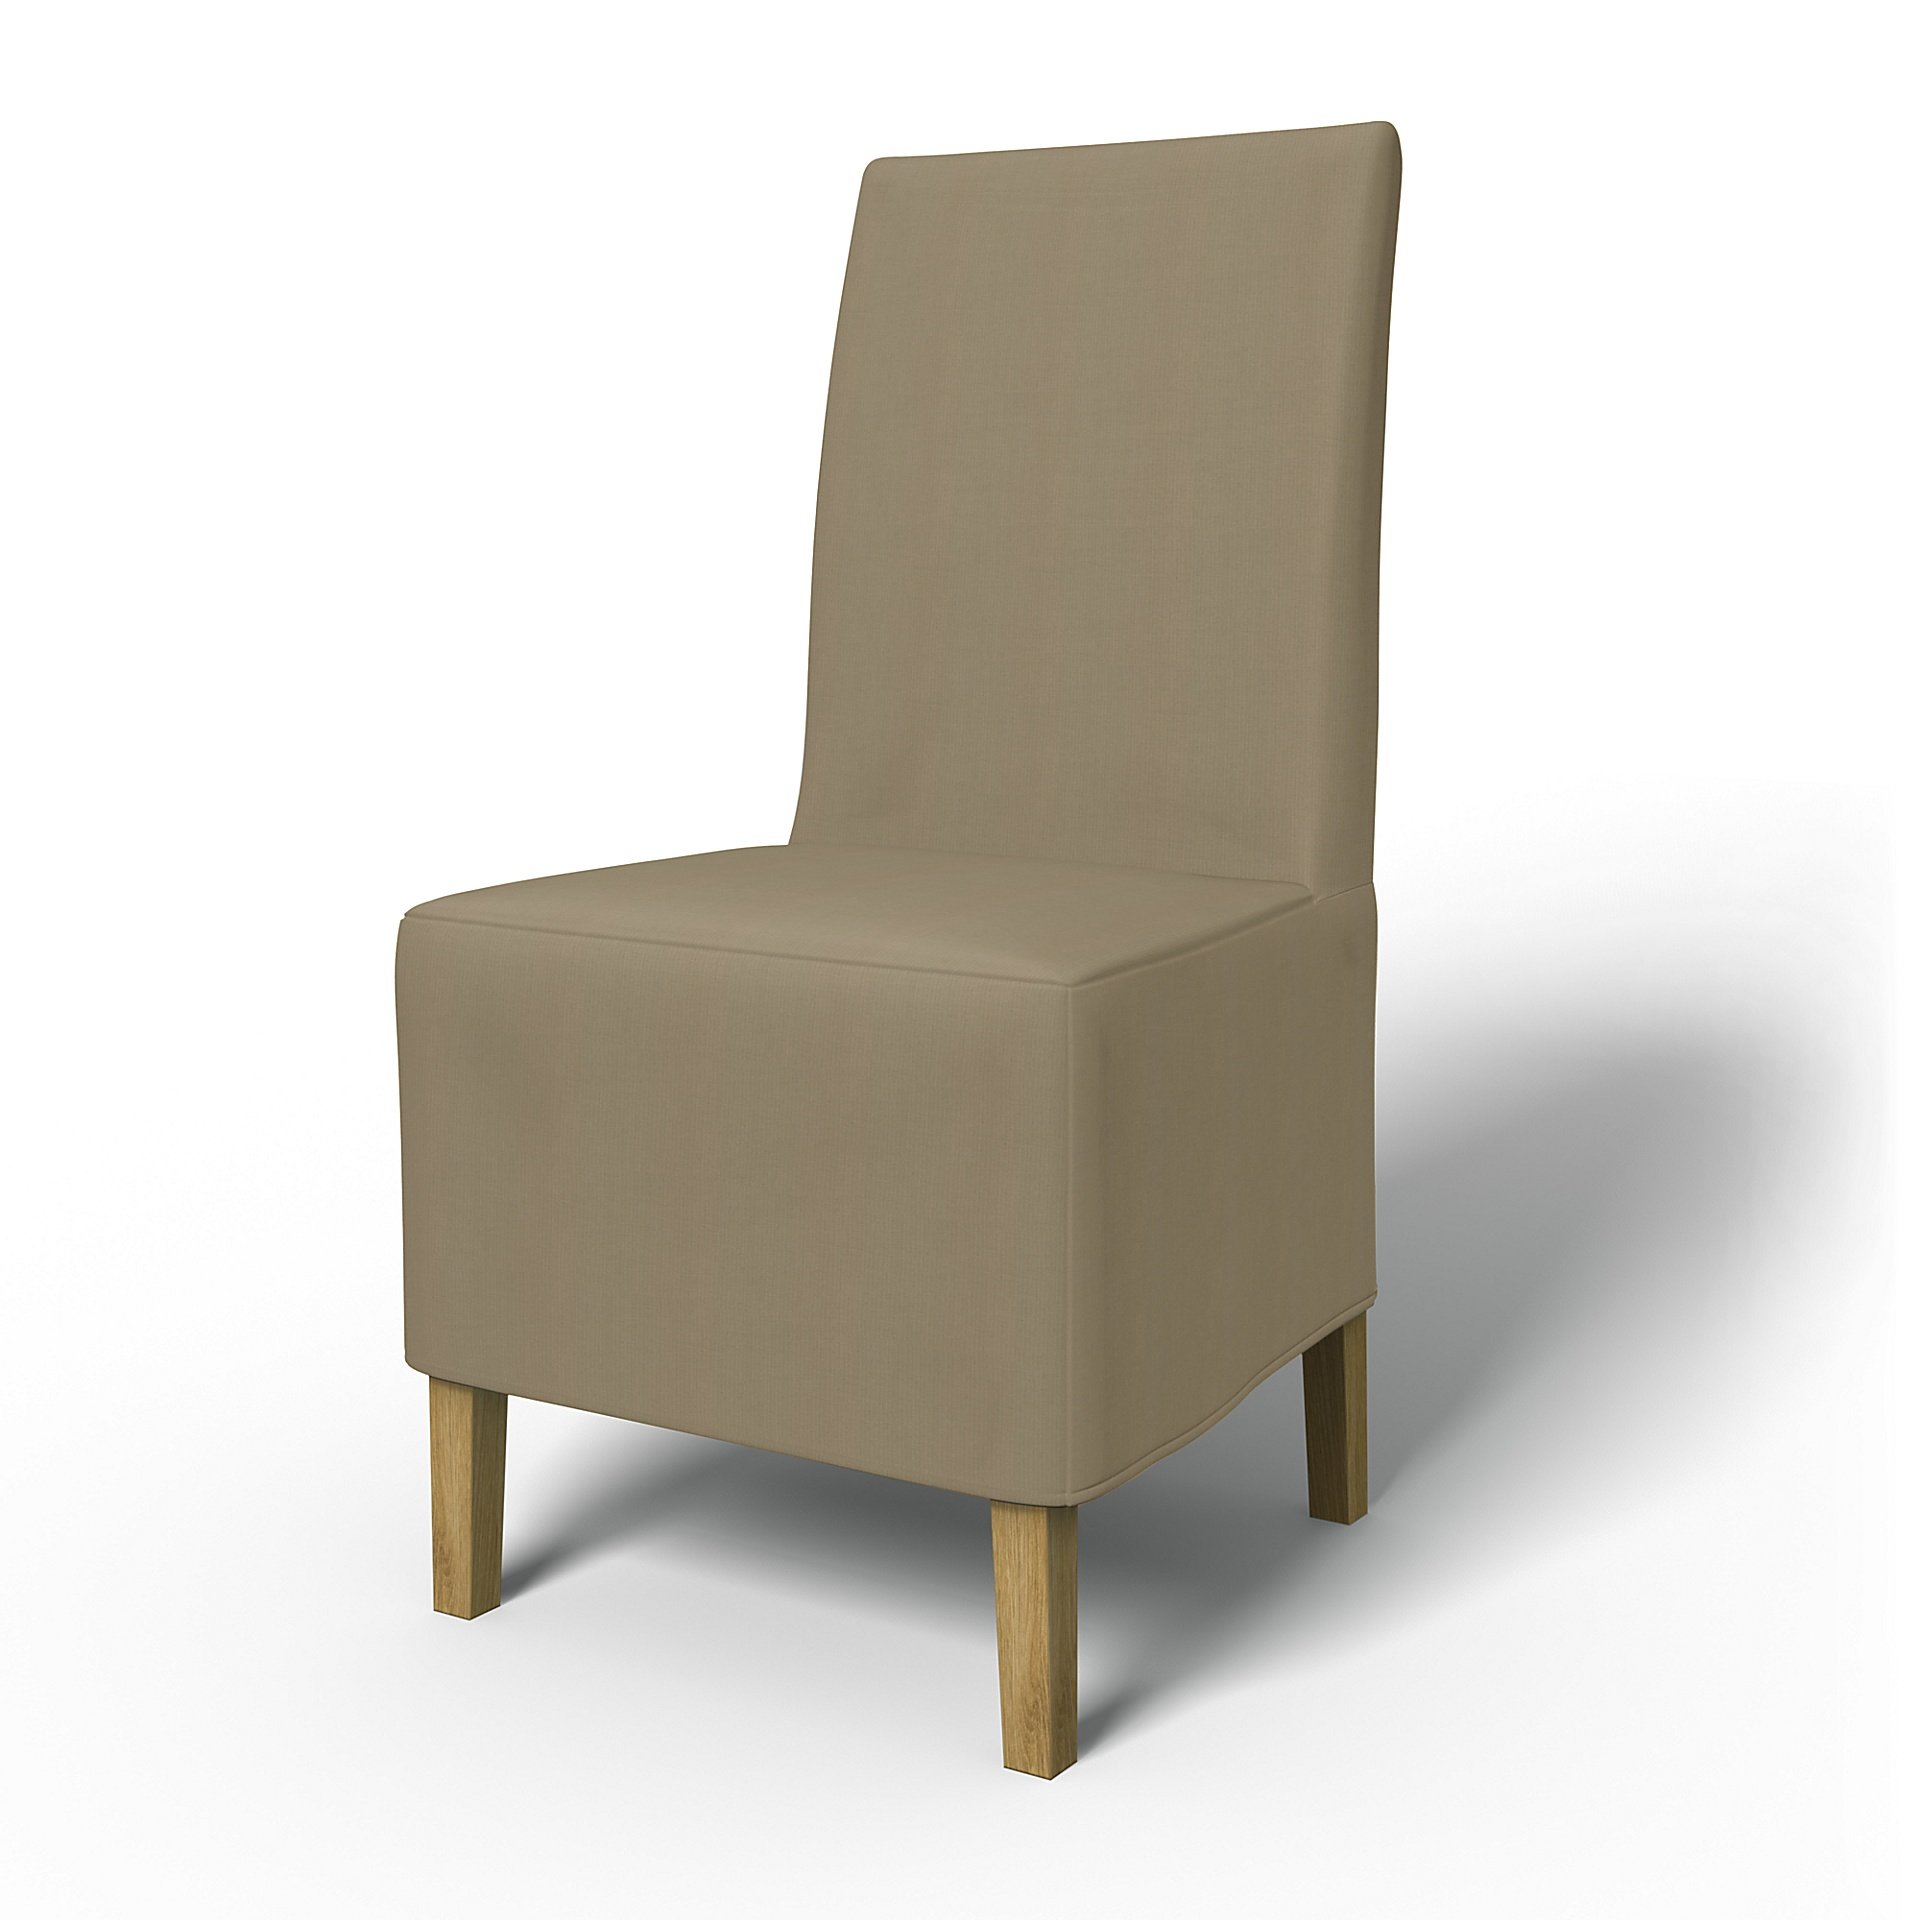 IKEA - Henriksdal Dining Chair Cover Medium skirt (Standard model), Dark Sand, Outdoor - Bemz